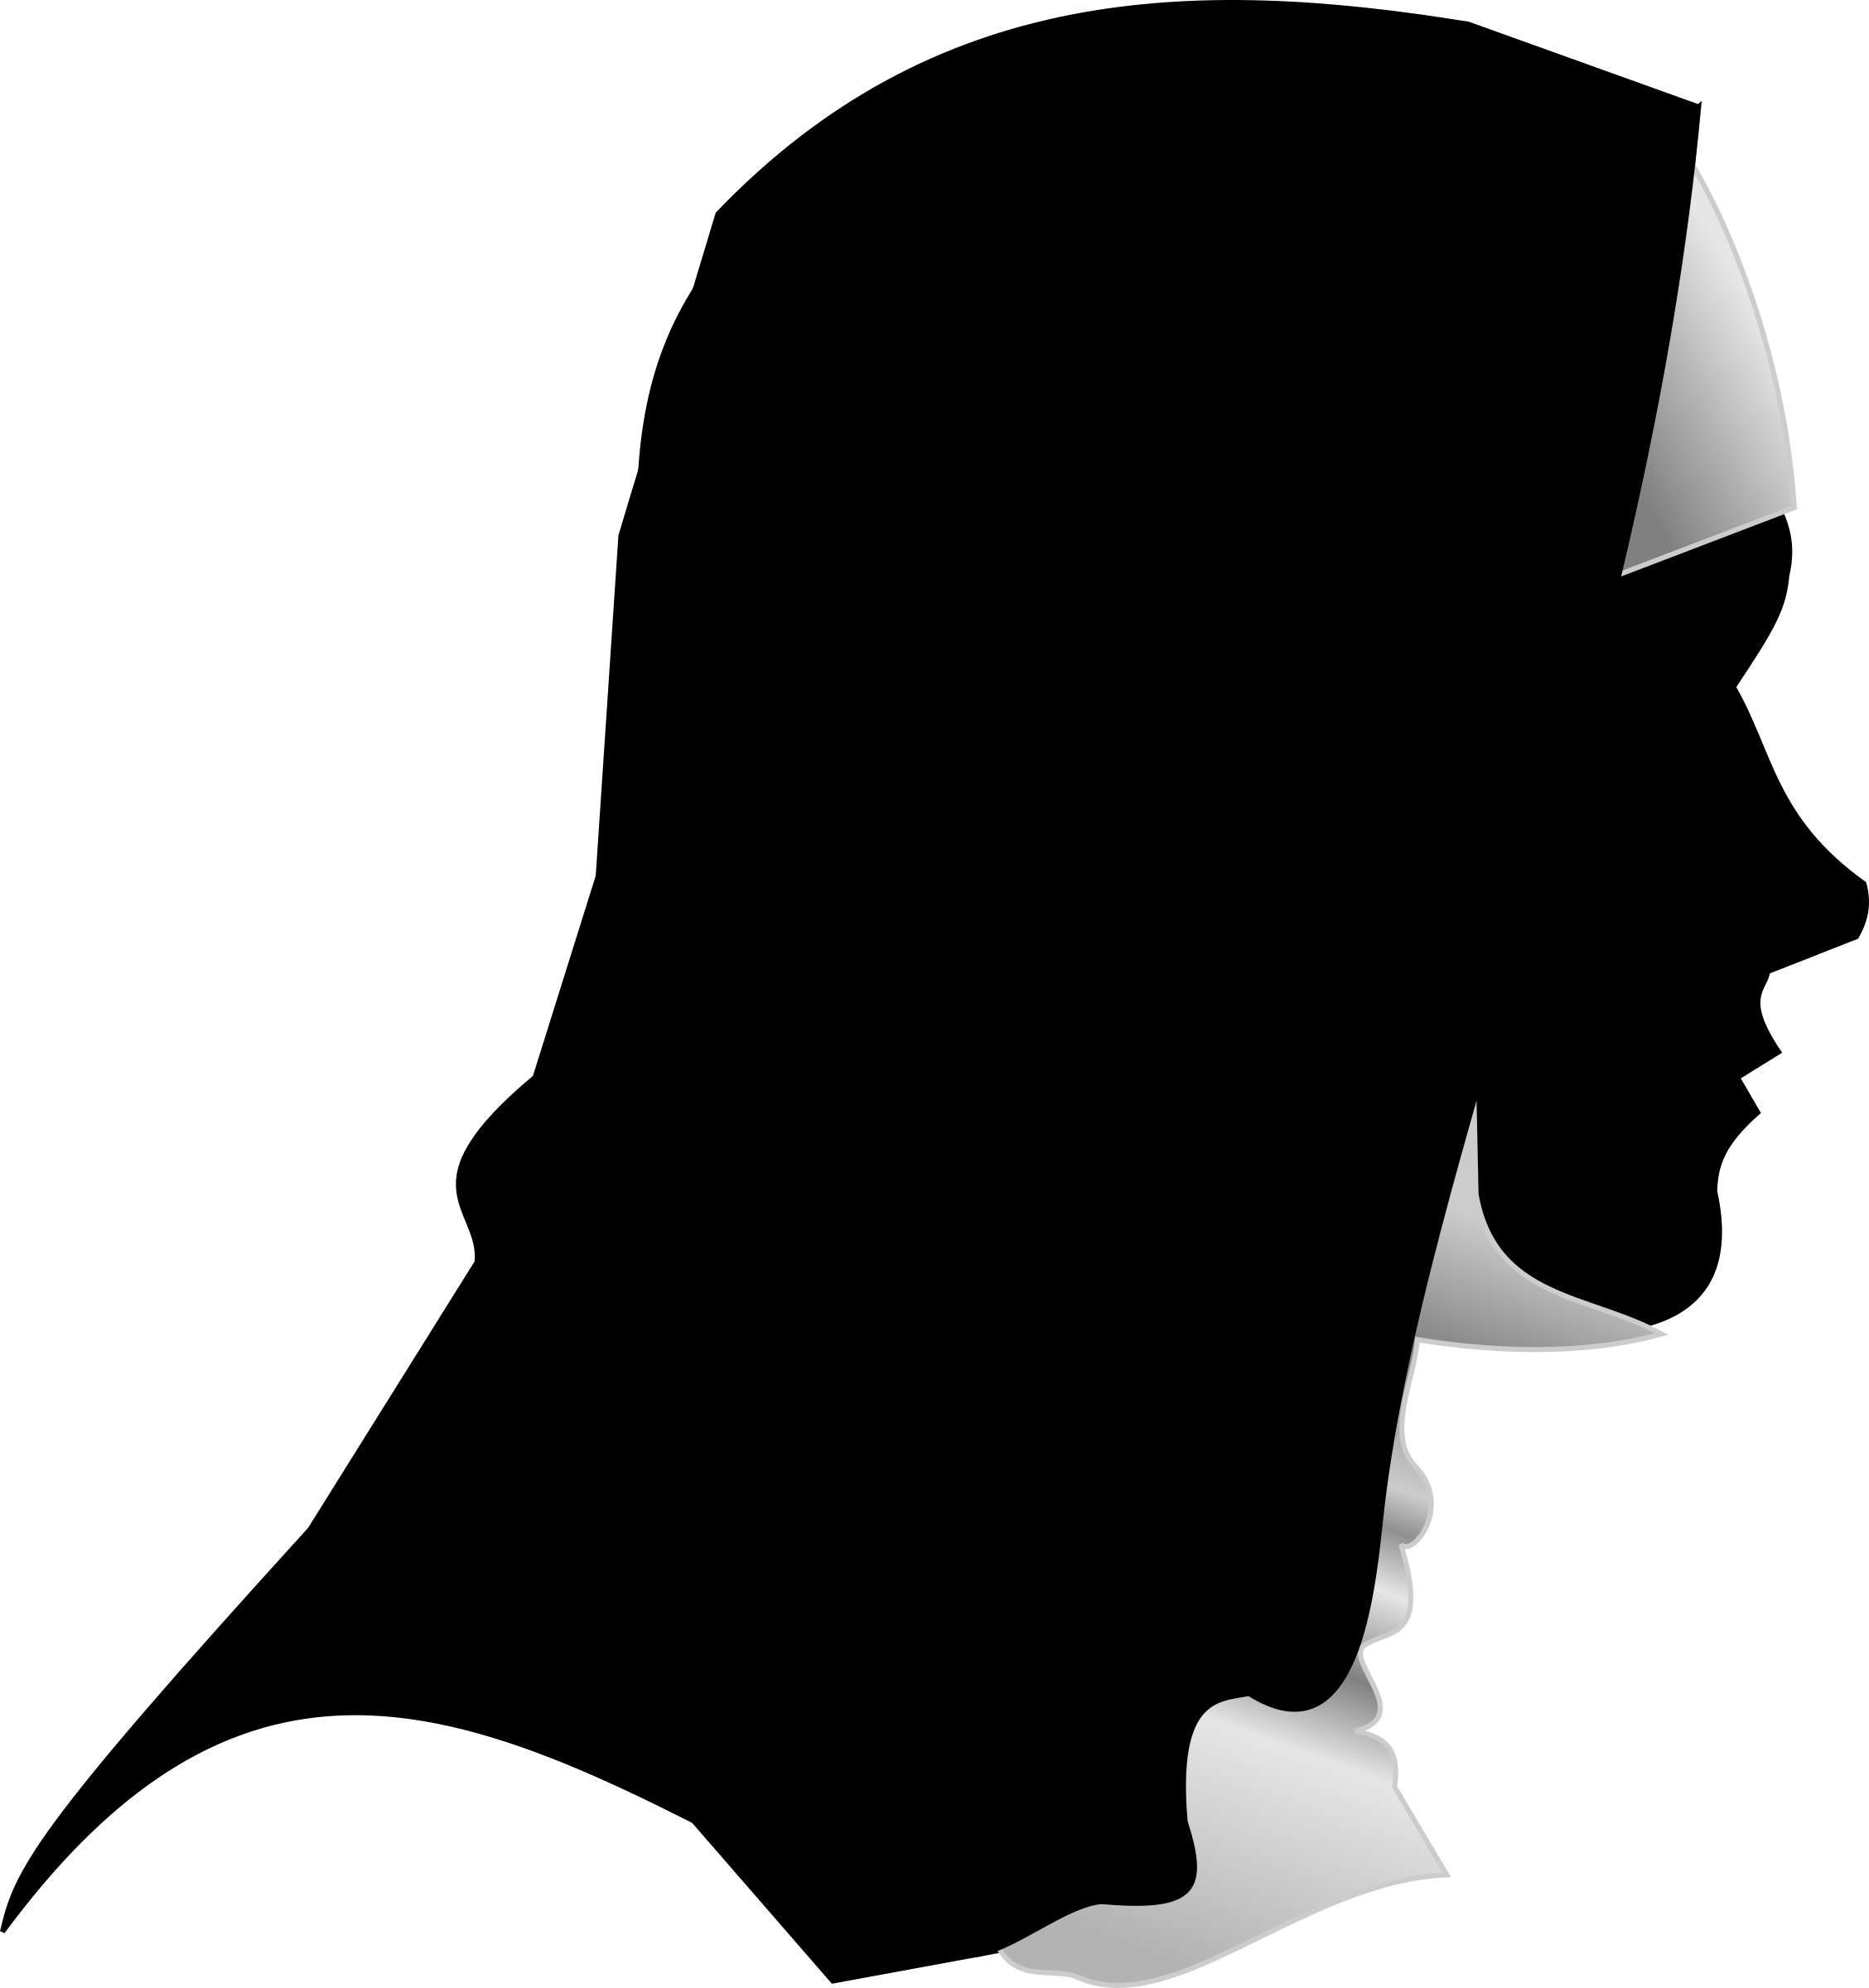 Catholic Nun Silhouette Profile SVG Clip arts